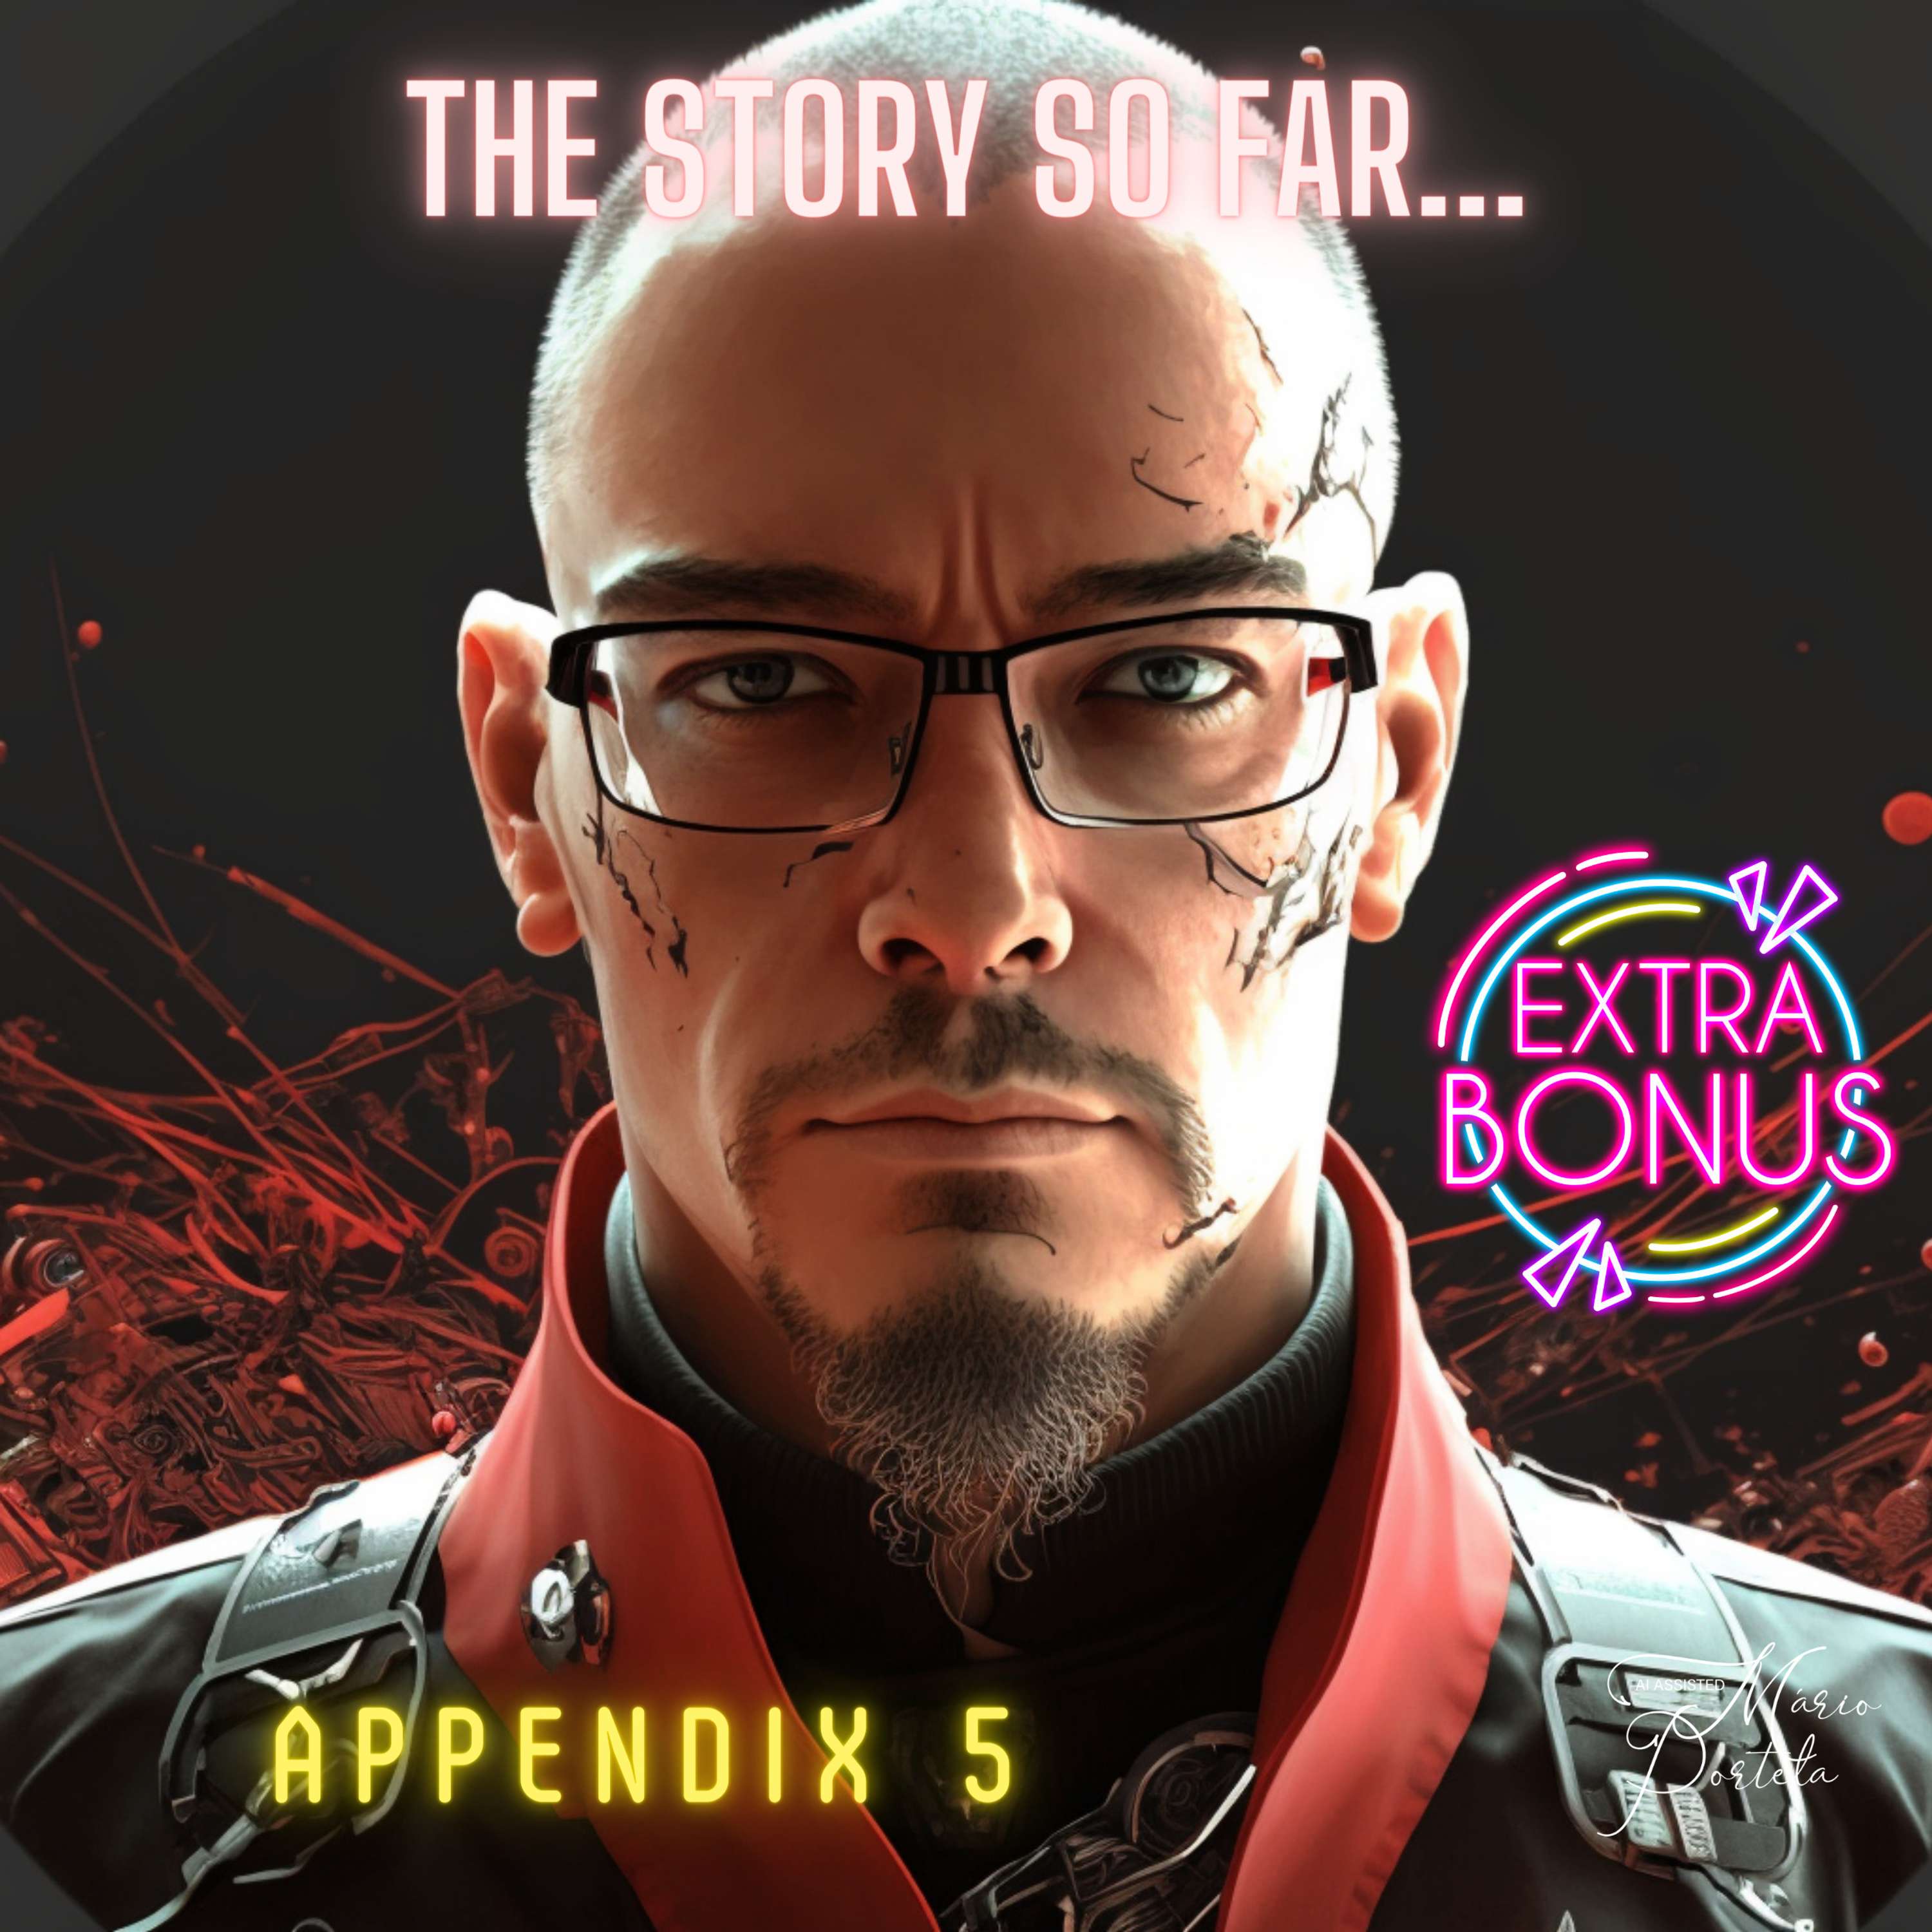 Appendix 5: The Story so far...